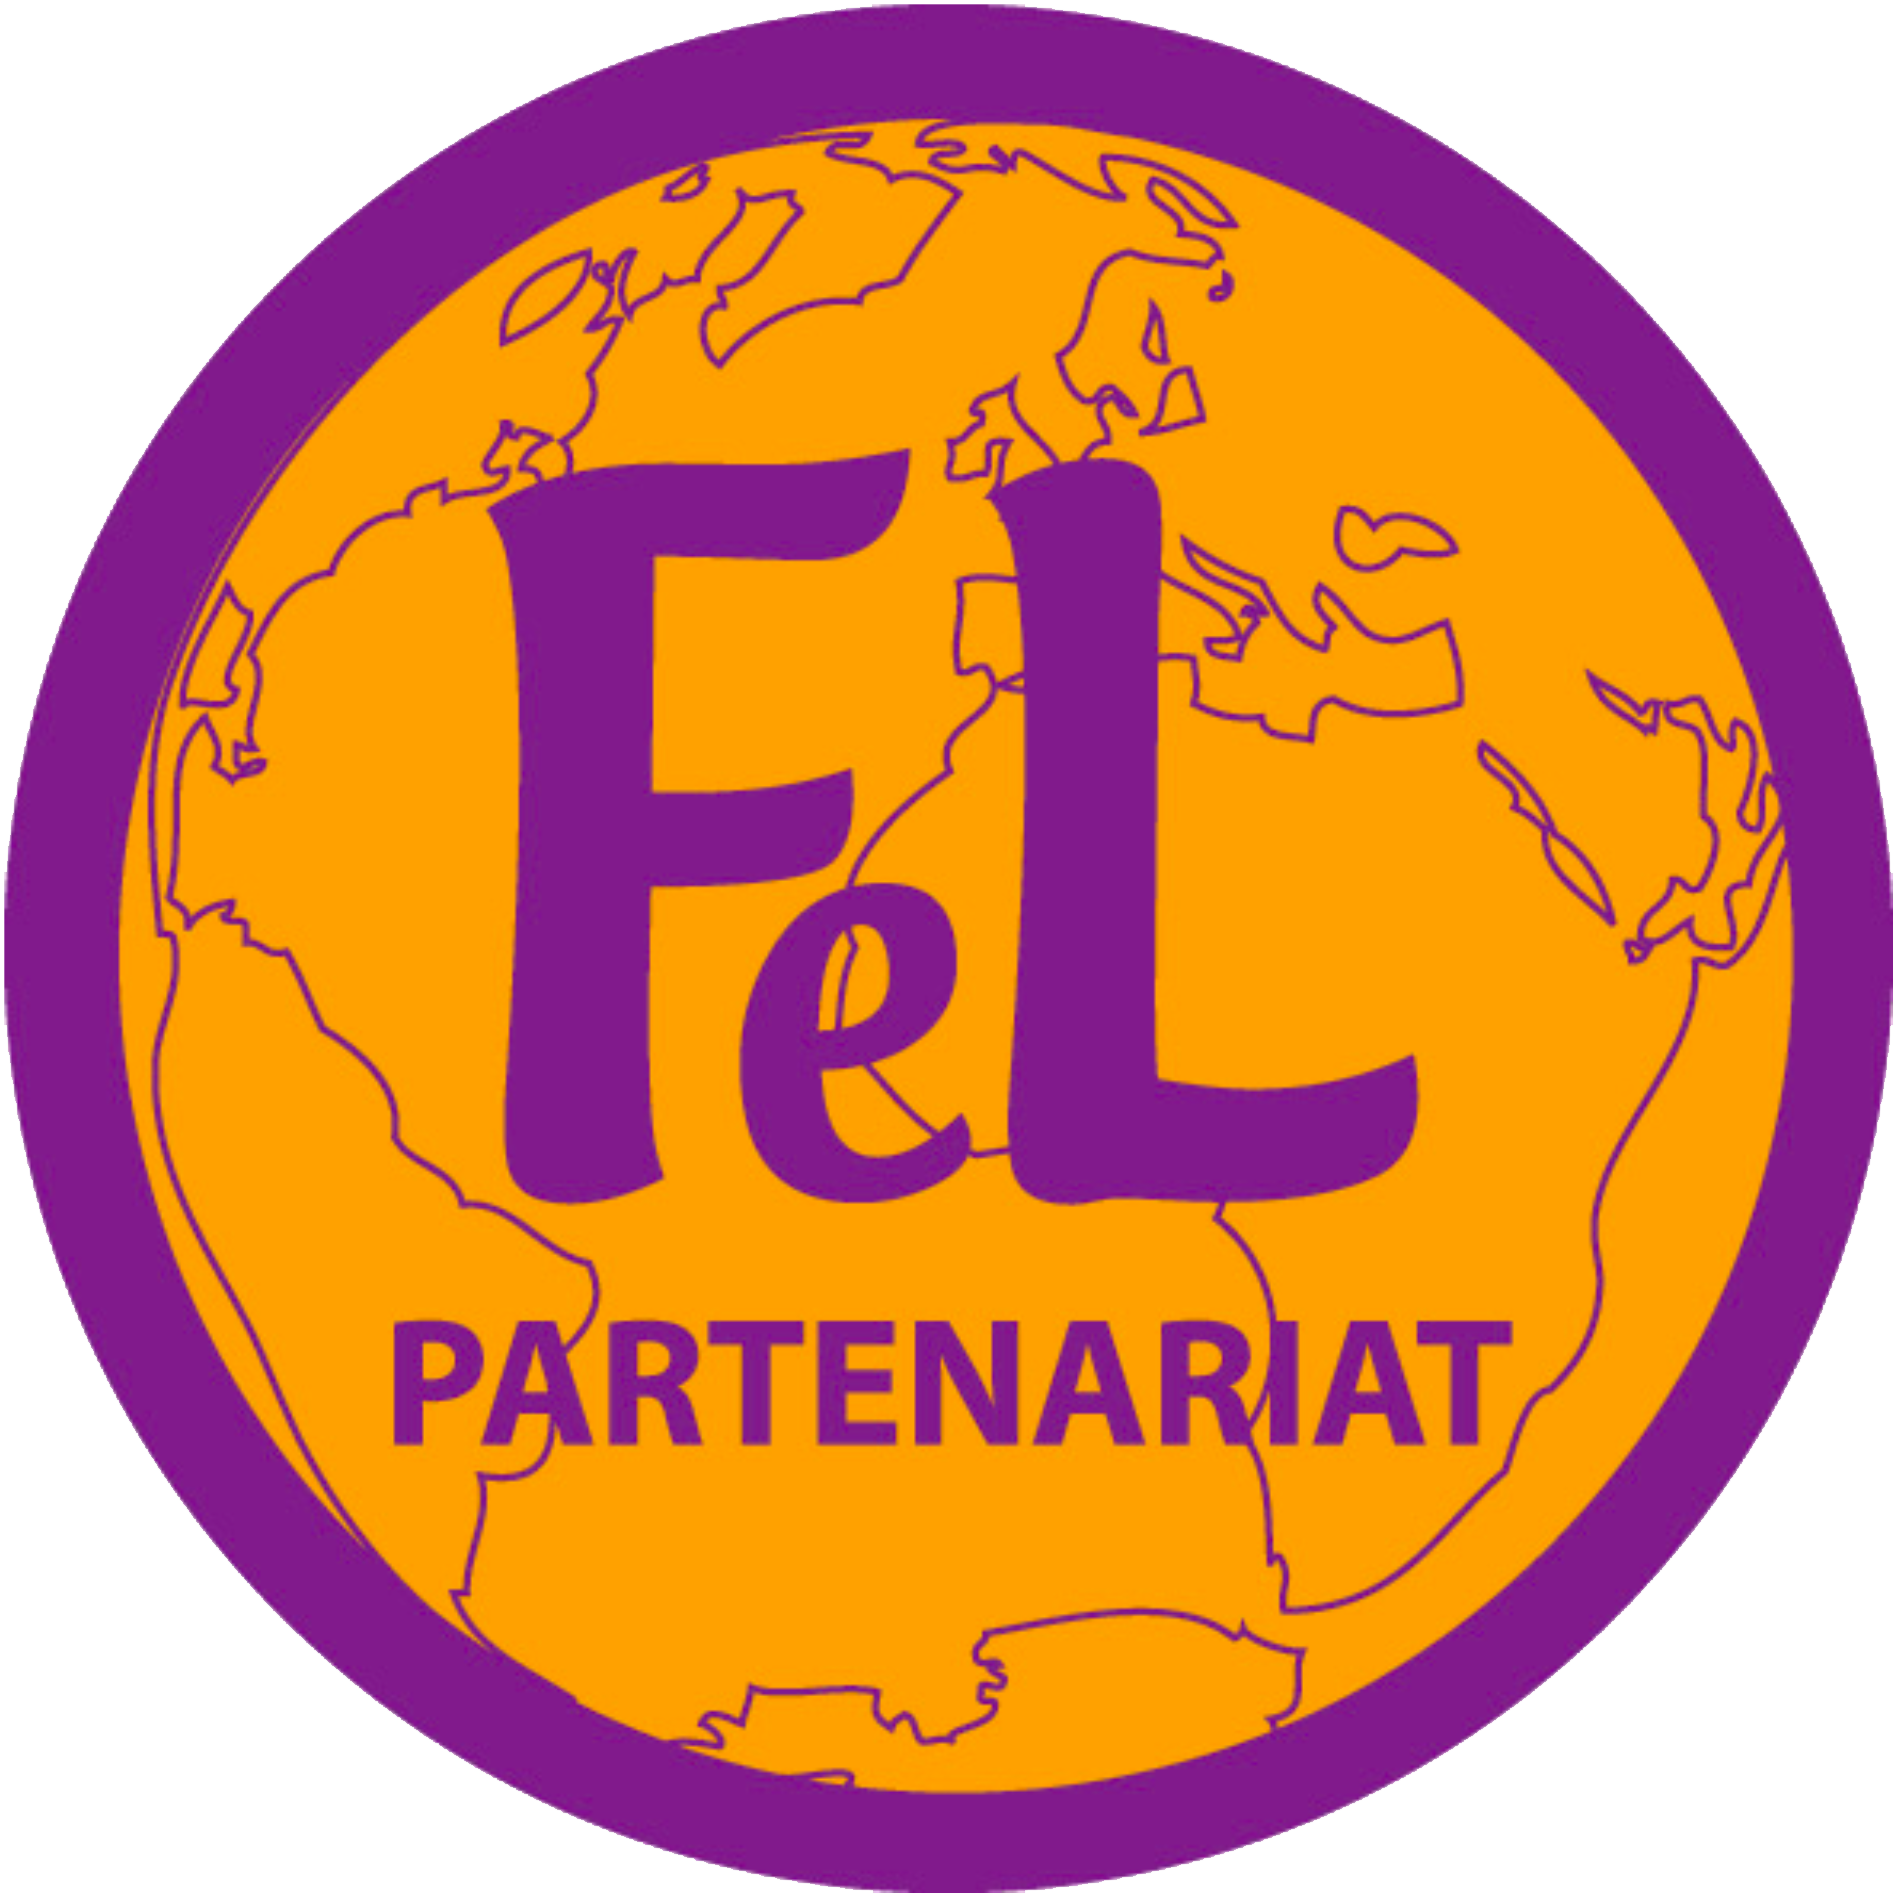 Fel Partenariat logo